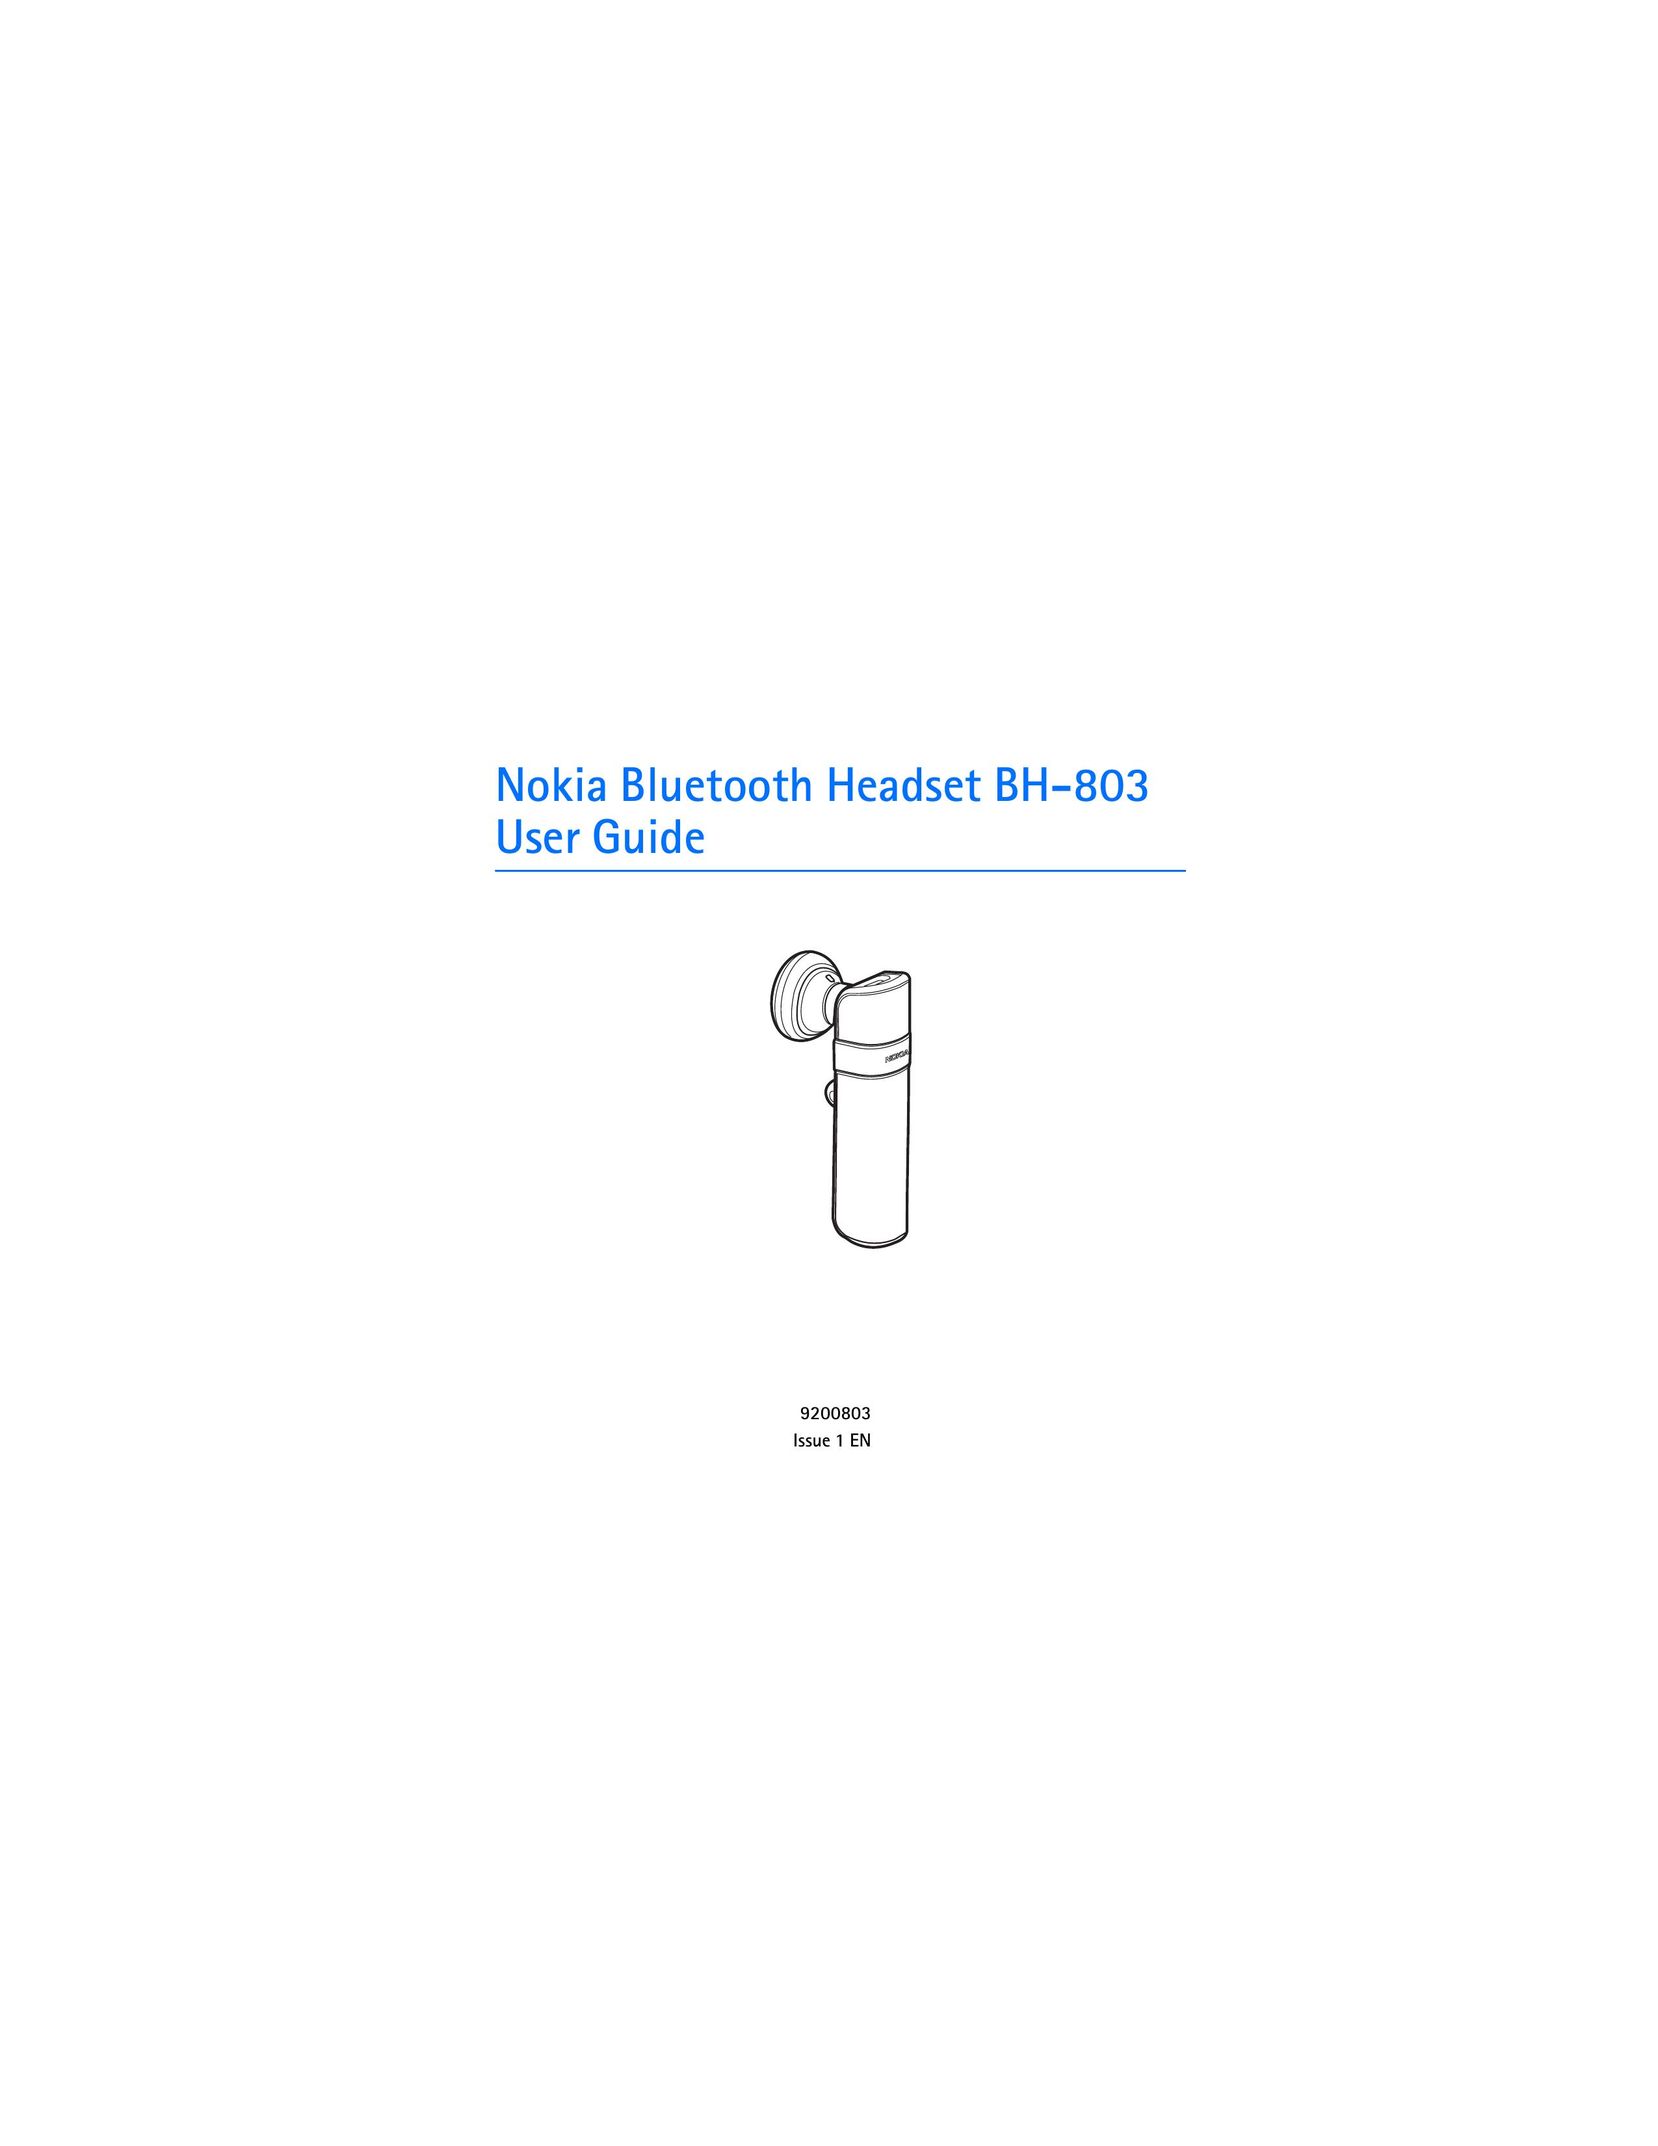 Nokia BH-803 Bluetooth Headset User Manual